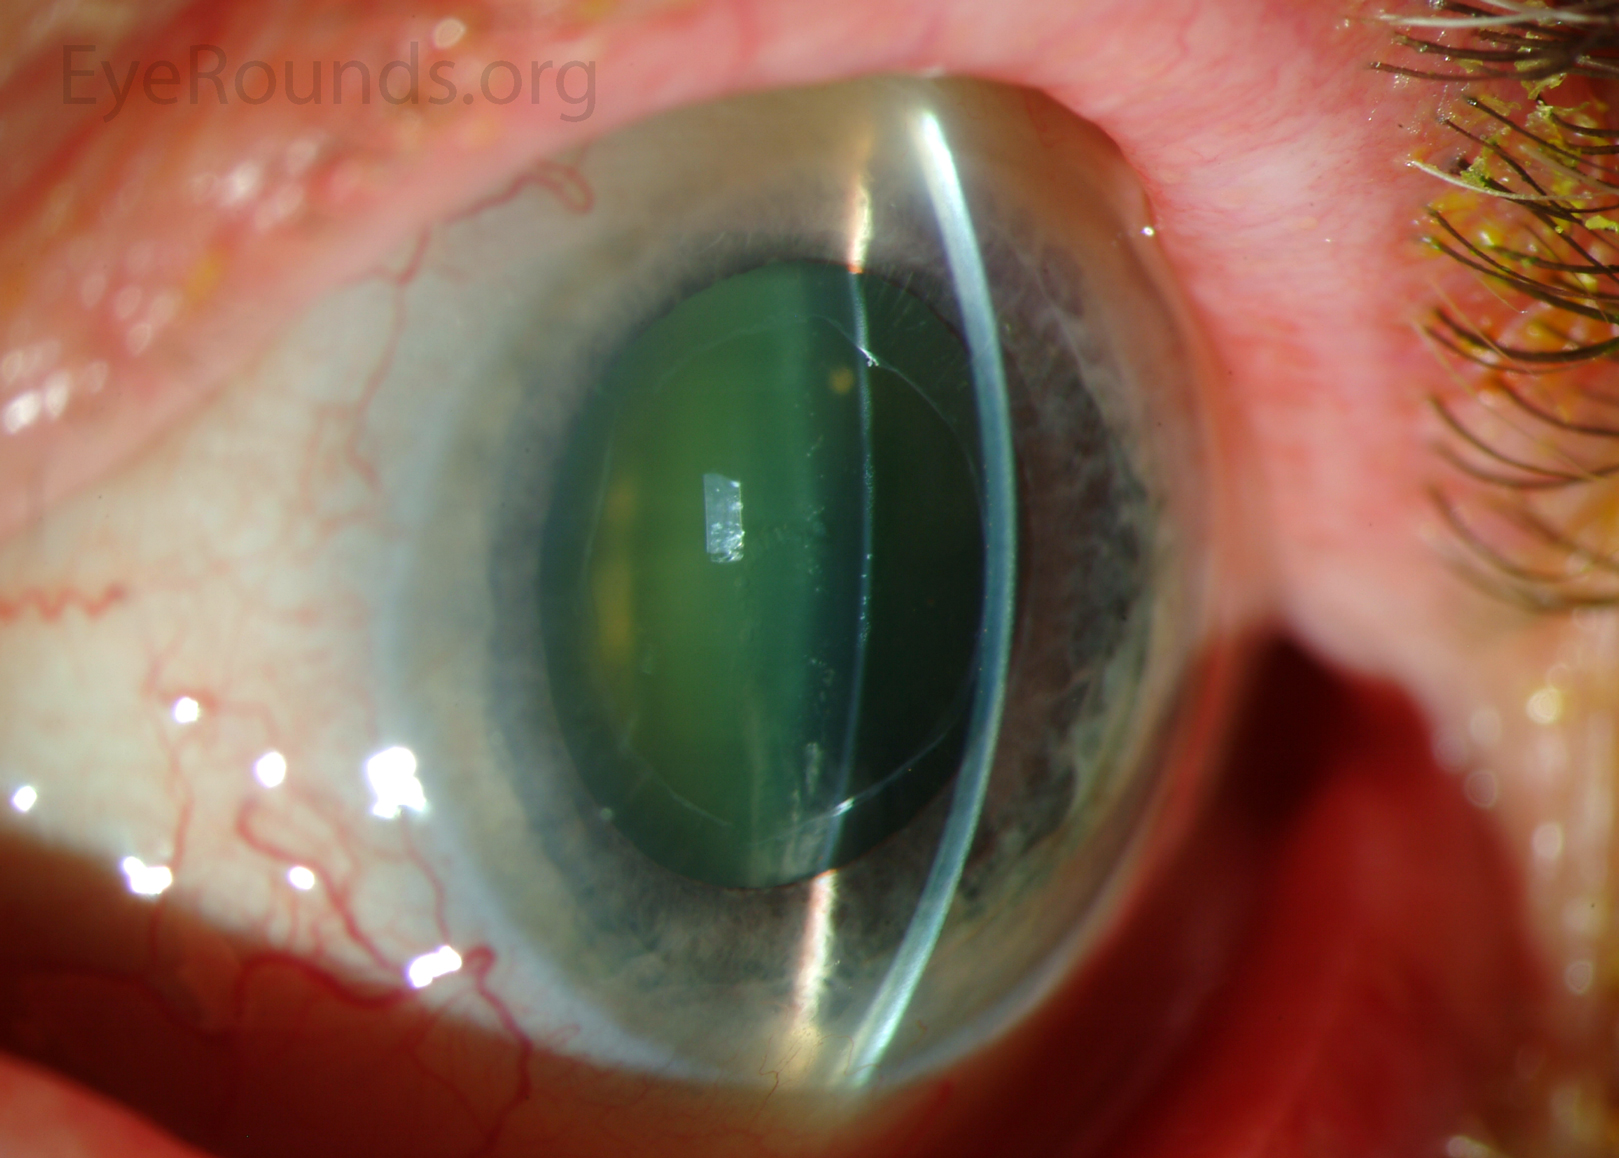 Exfoliative material on the pupillary margin and anterior lens capsule - slit lamp